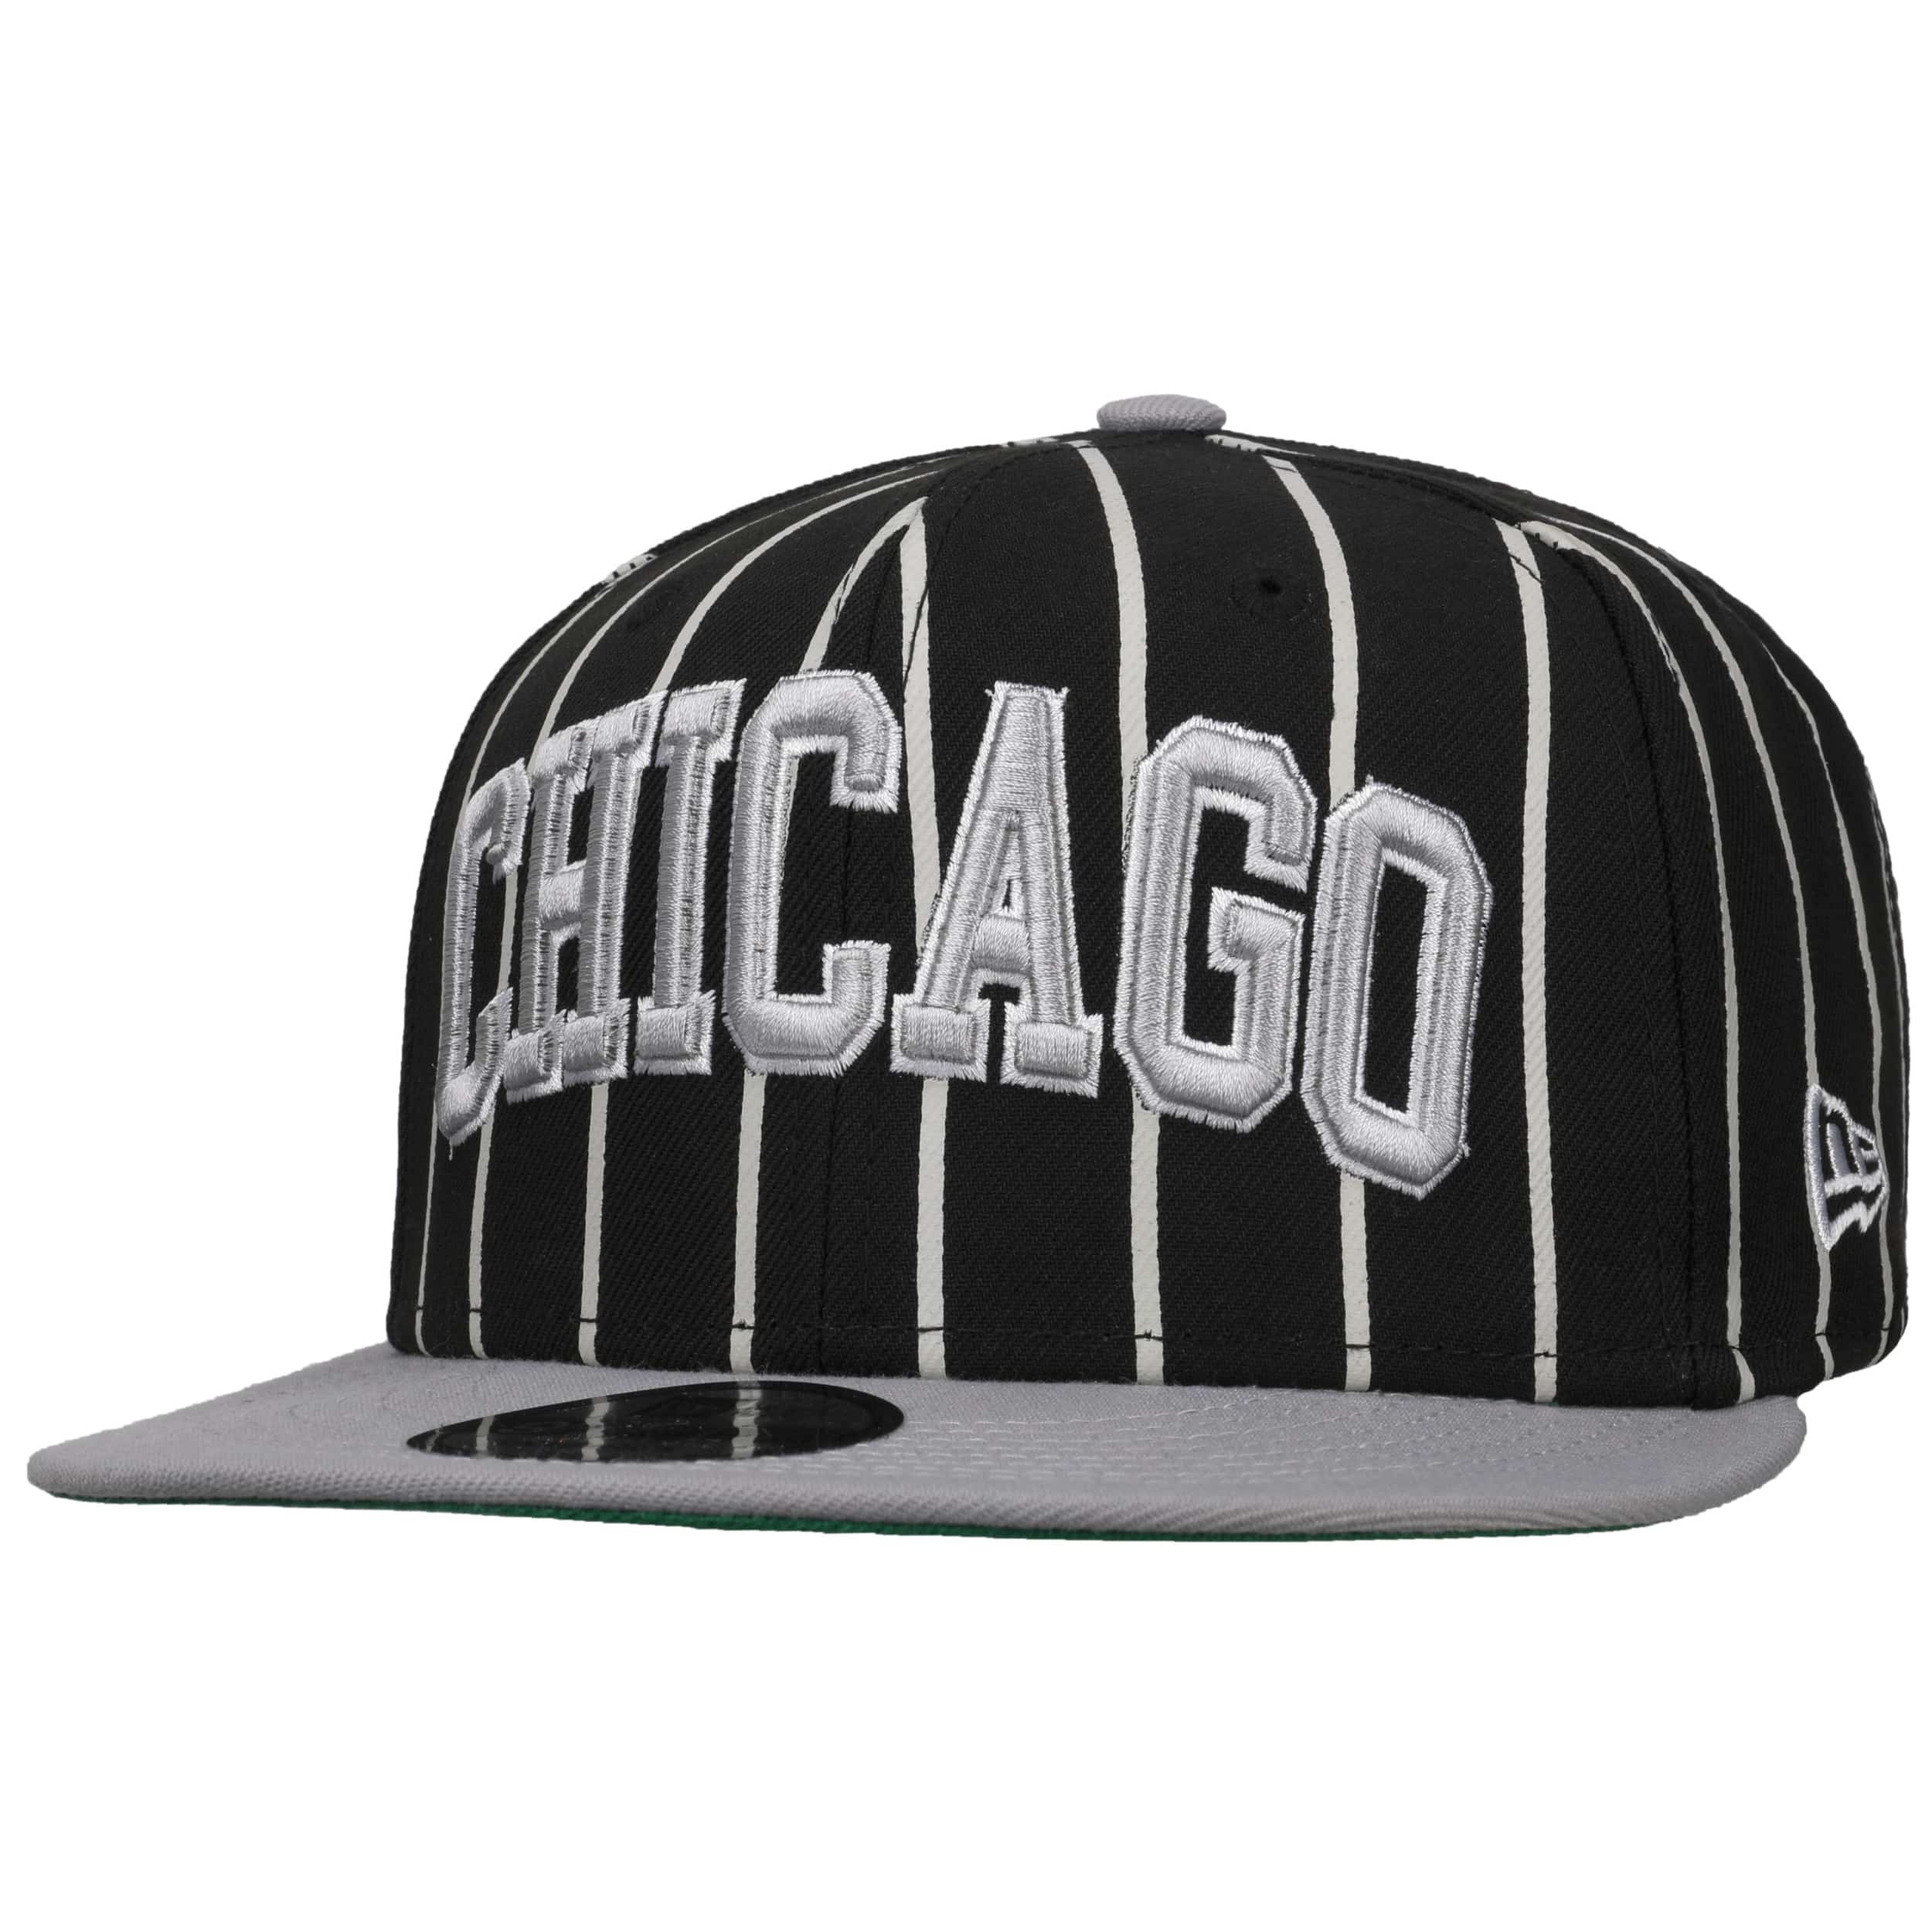 Chicago White Sox Hat, White Sox Baseball Hats, Baseball Cap